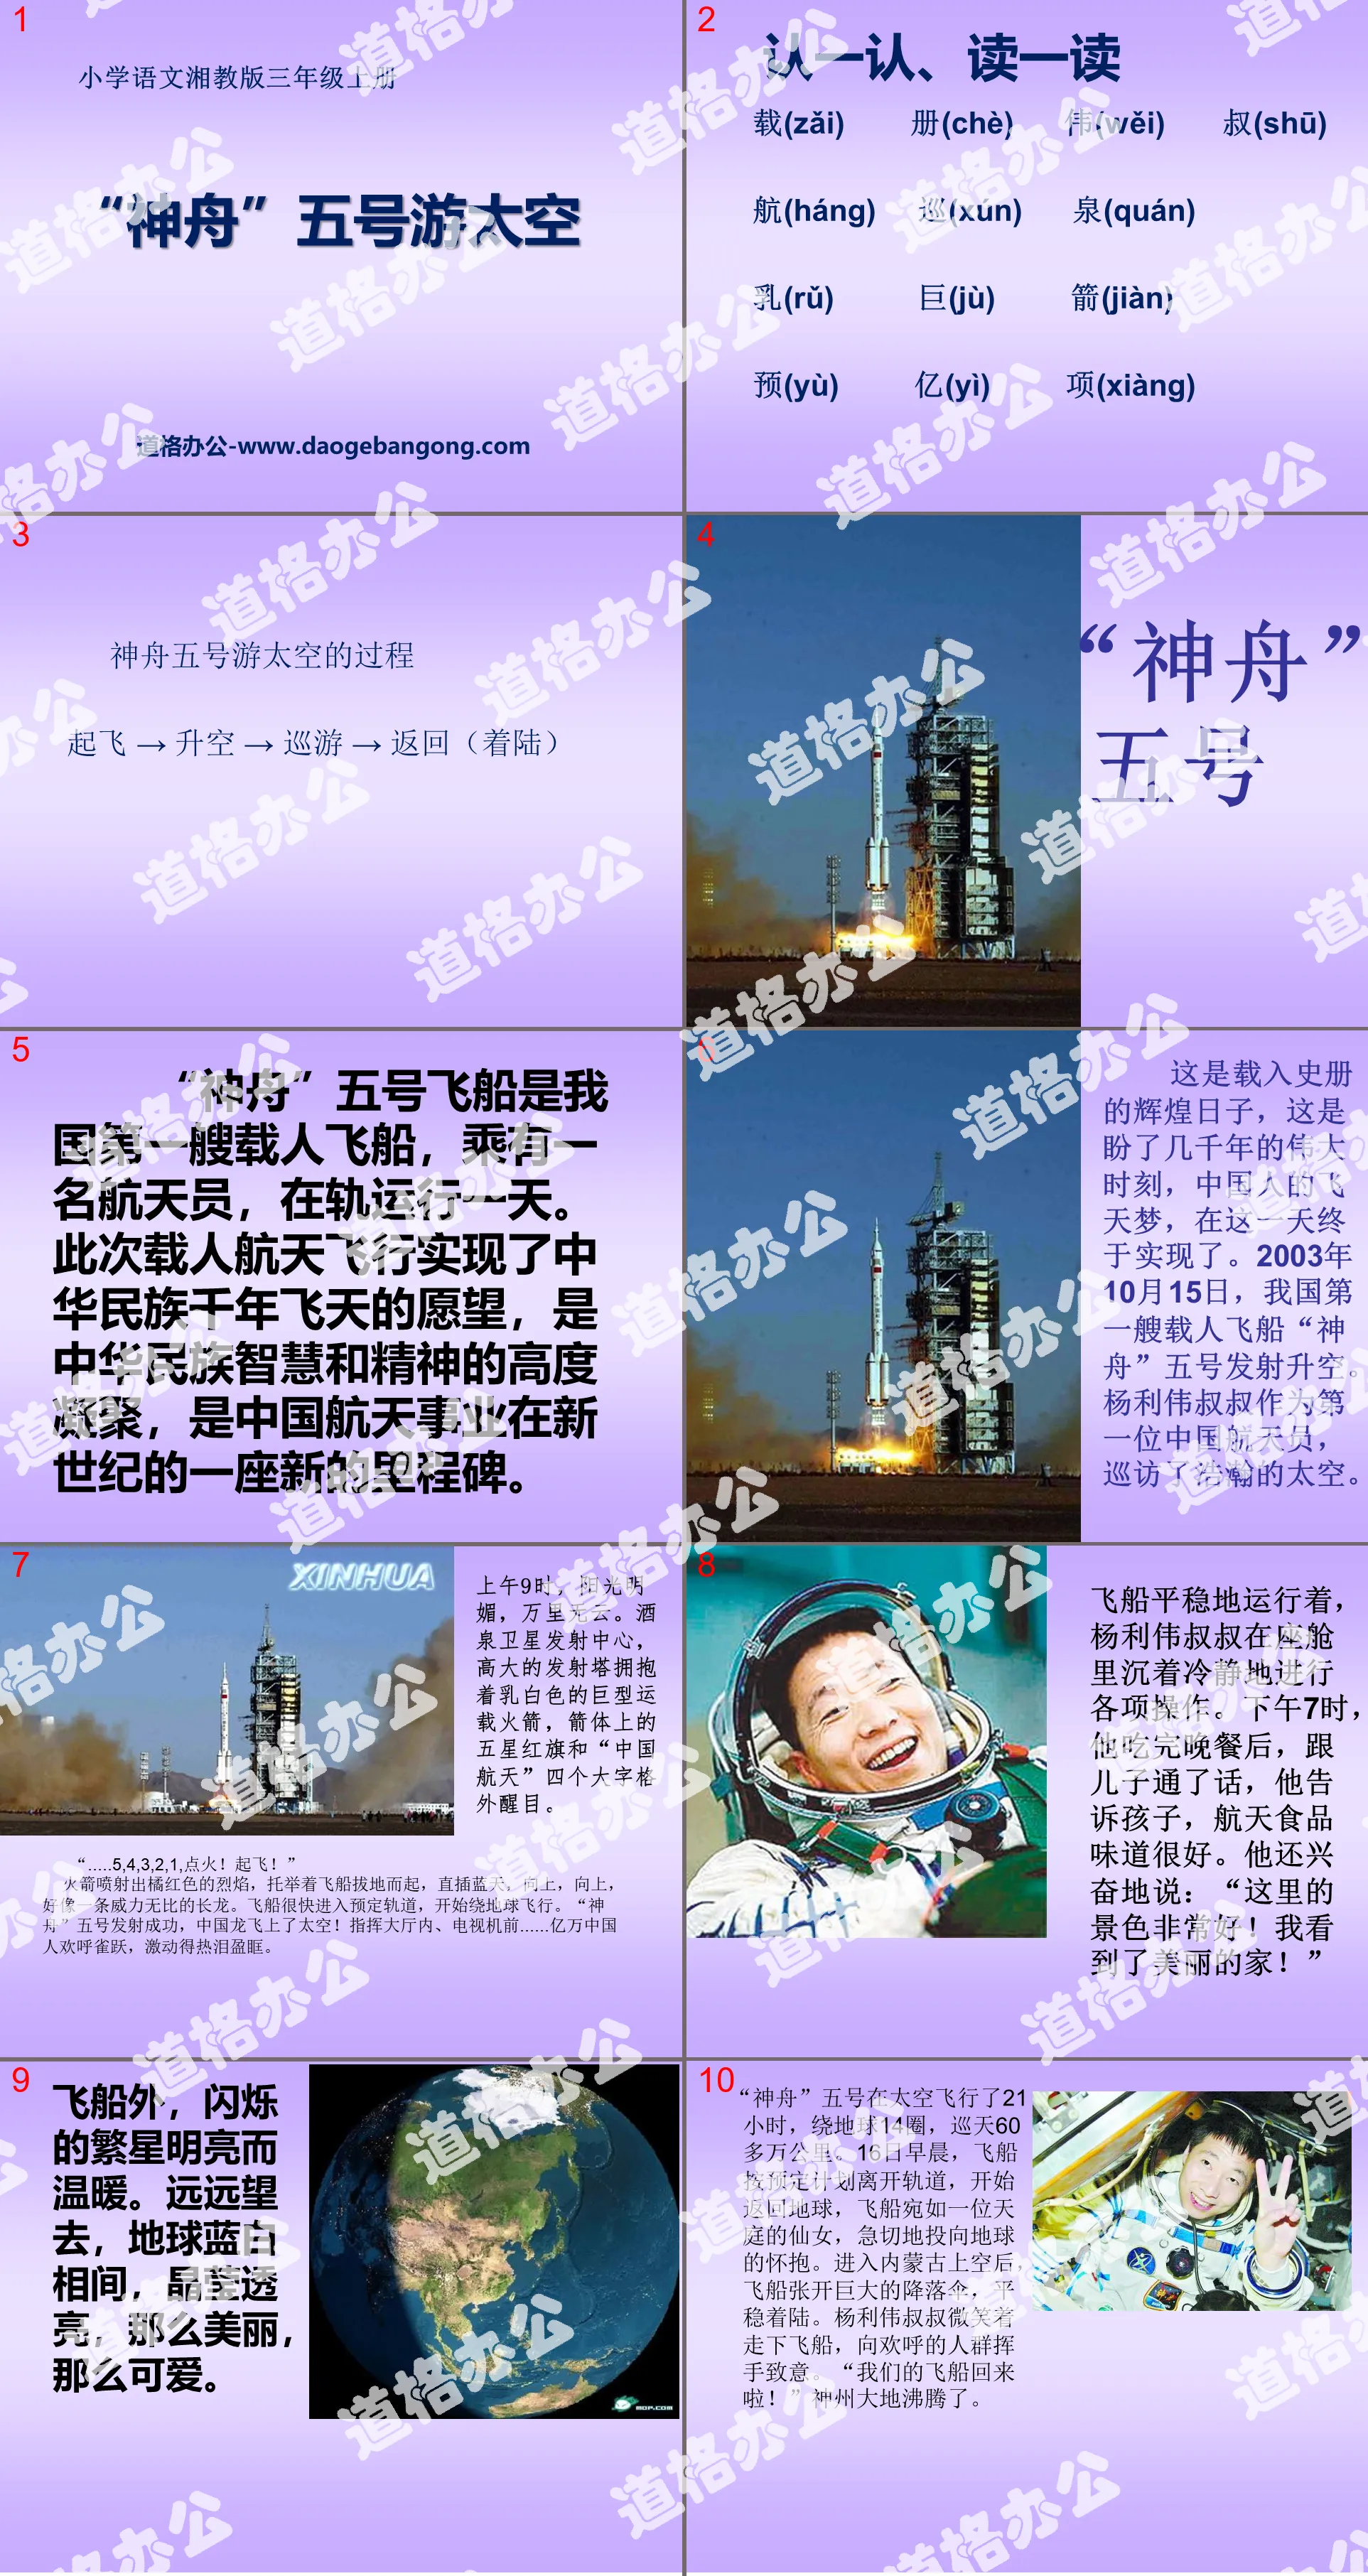 "Shenzhou 5 Space Tour" PPT courseware 5